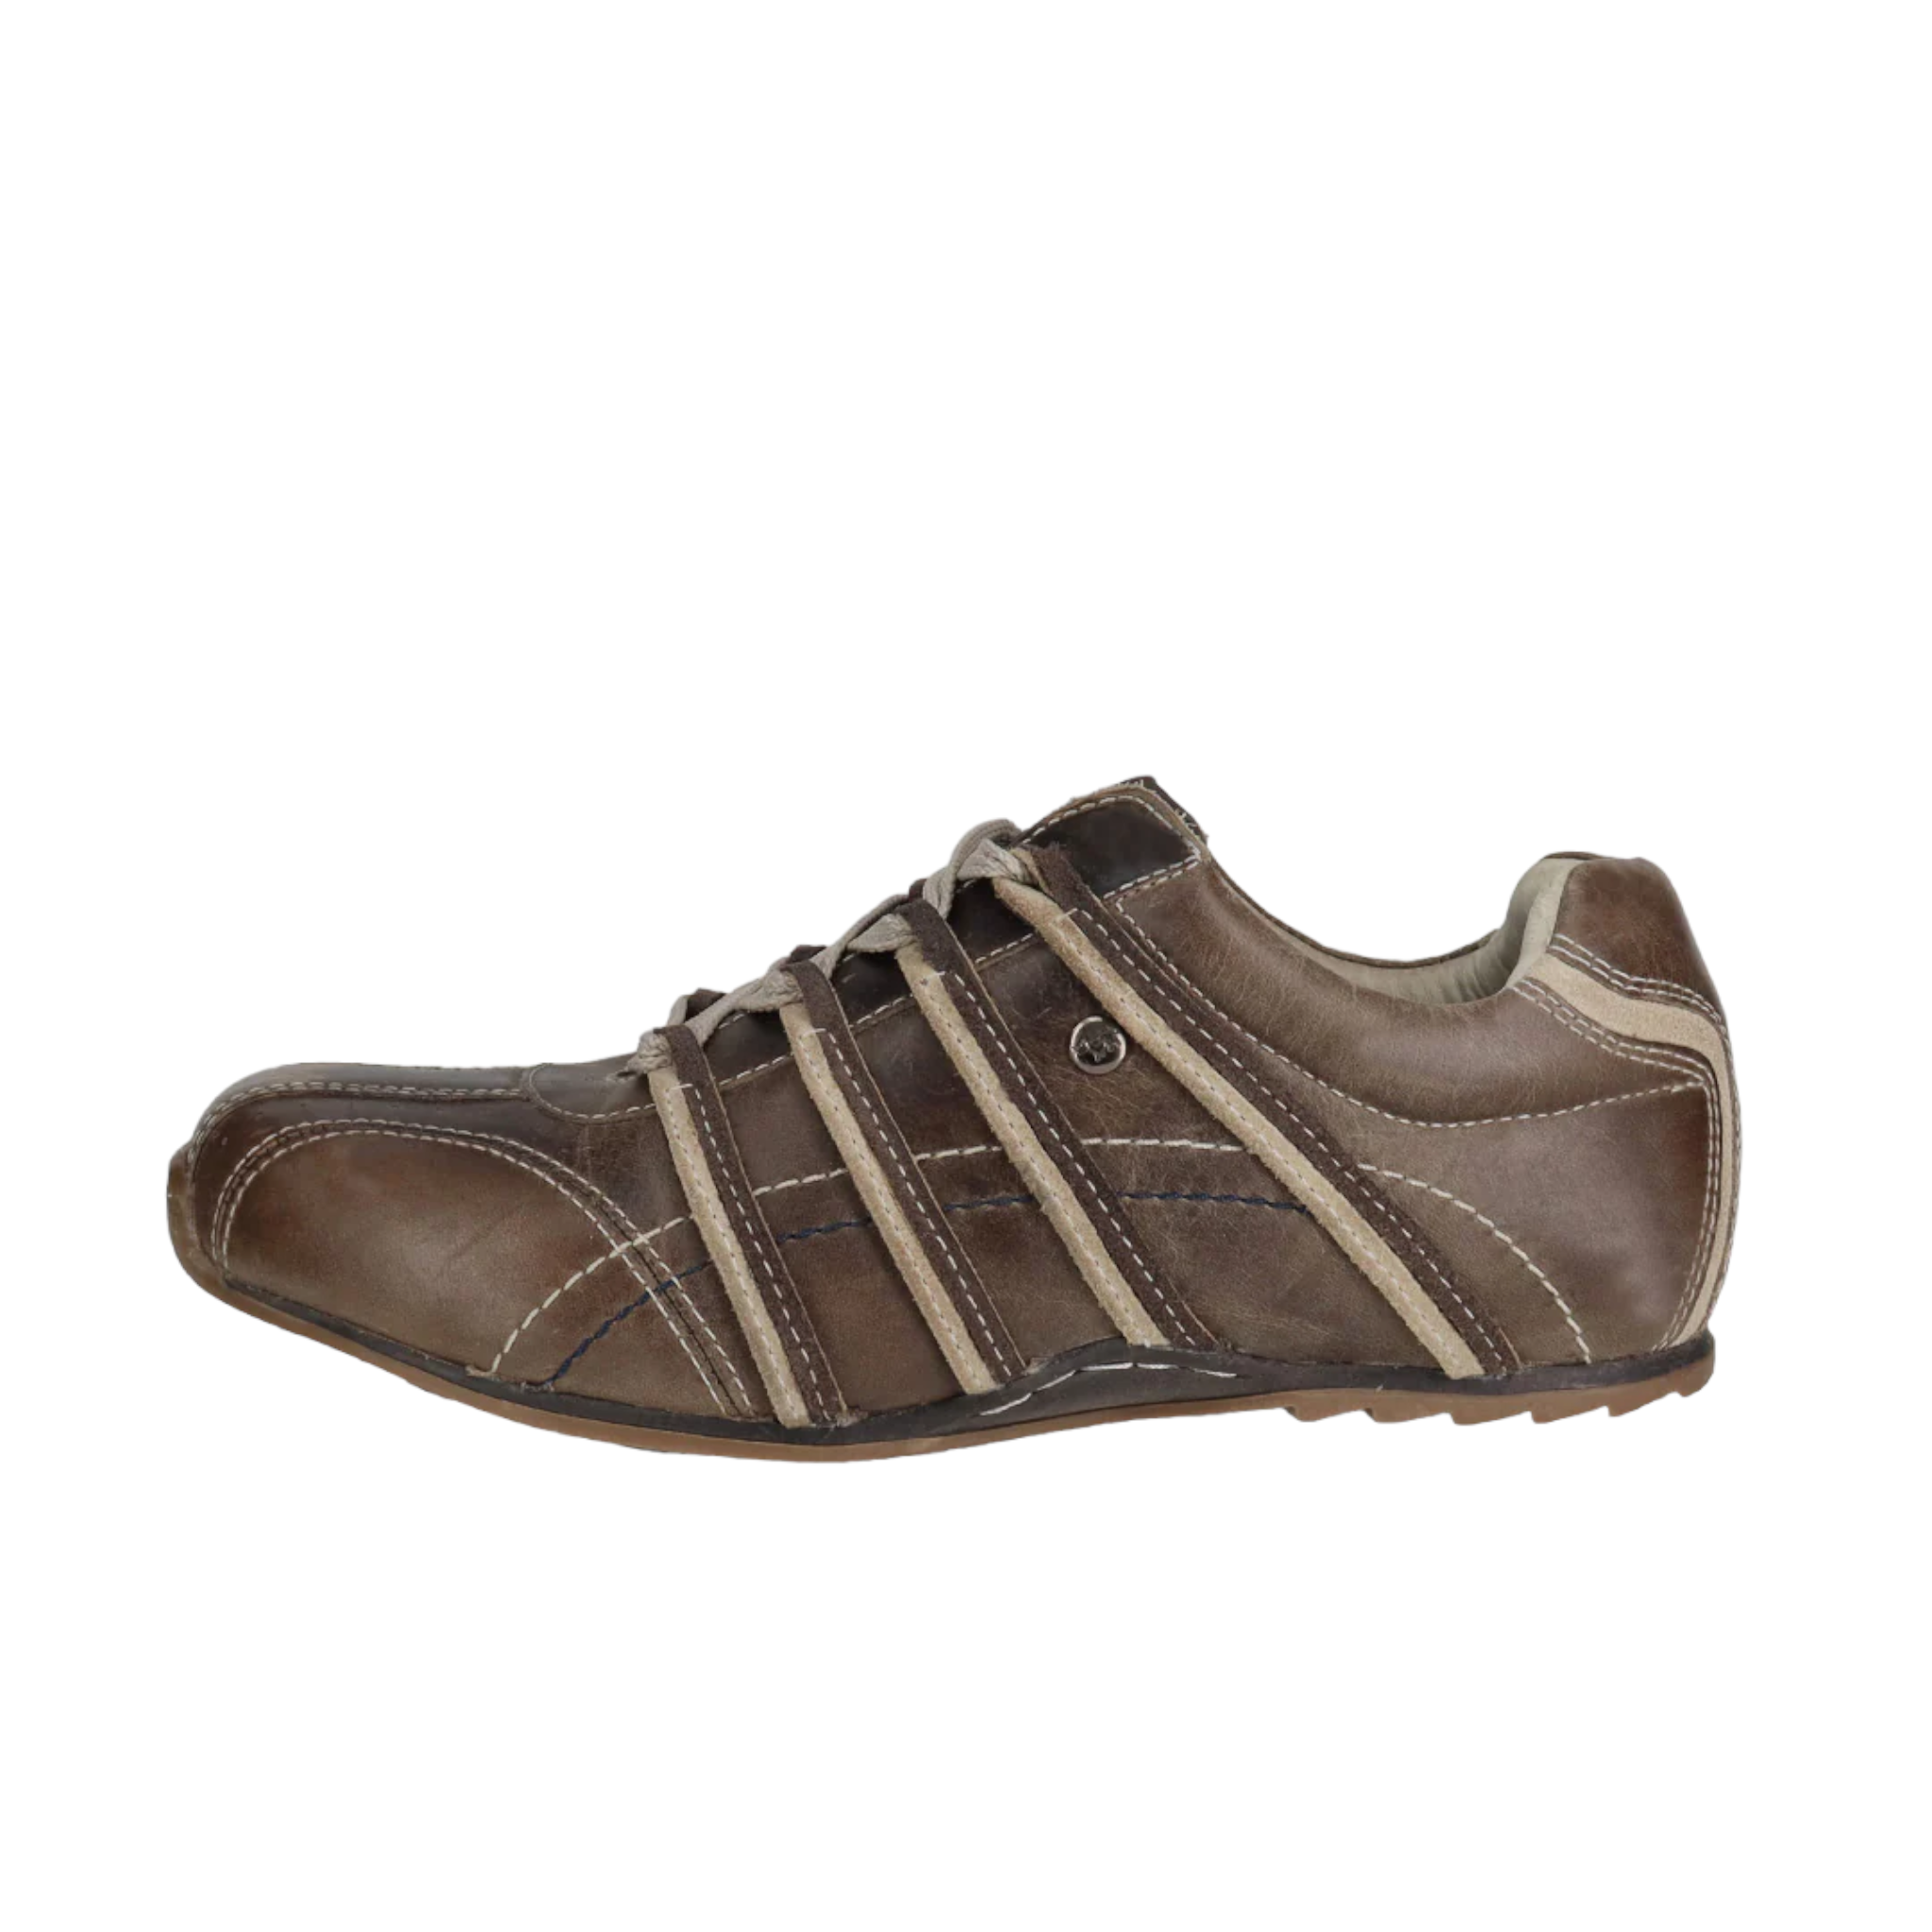 Kaka Mens - shoe&amp;me - Wild Rhino - Shoe - Mens, Shoes, Winter